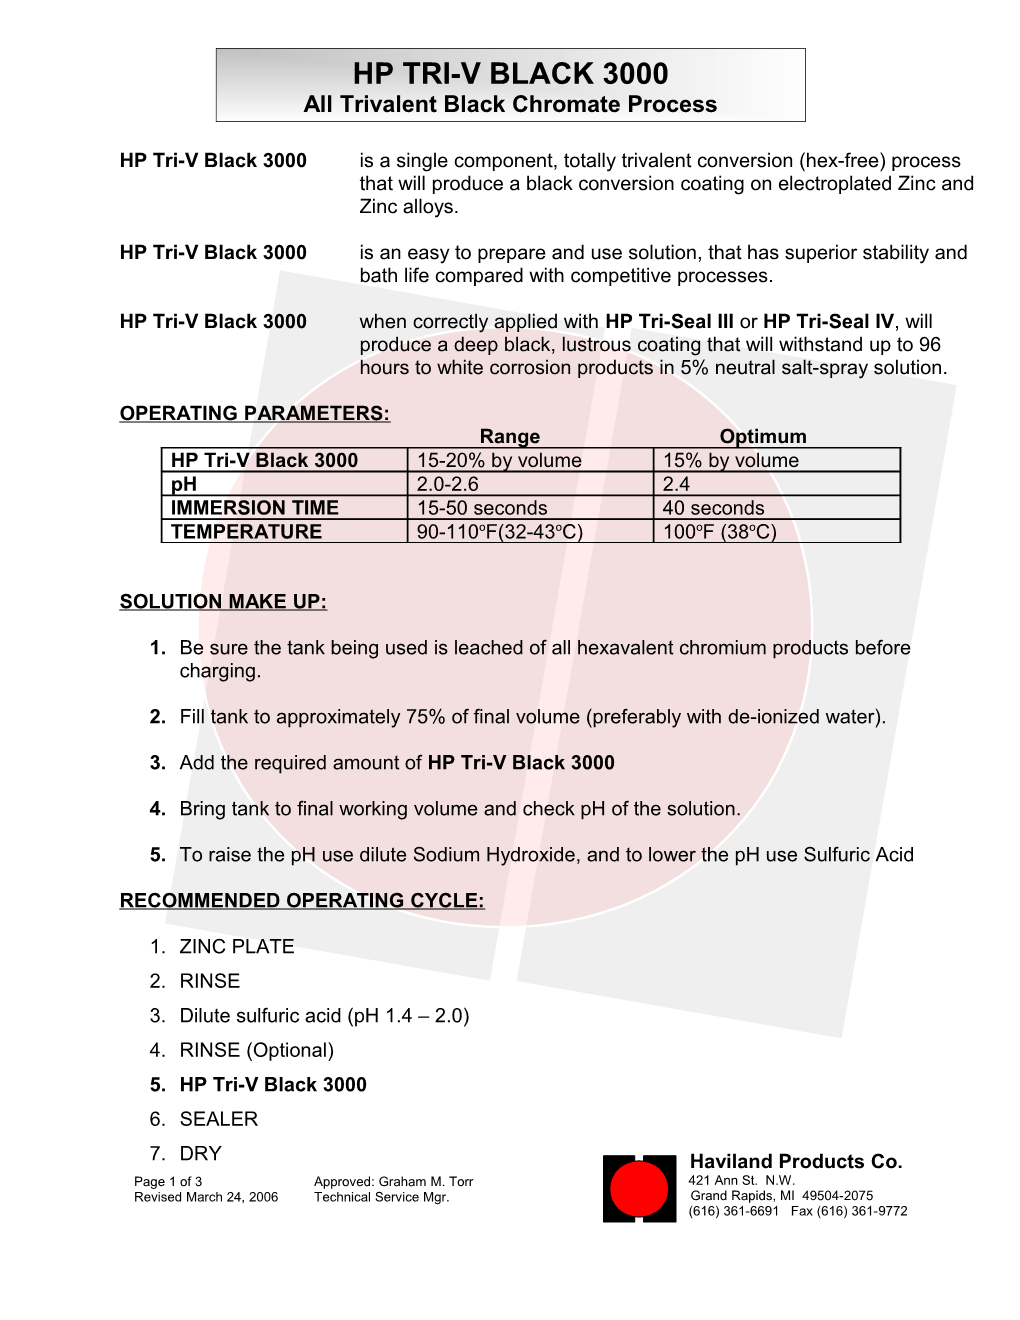 HP Tri-V Black 3000 Page 2 of 3